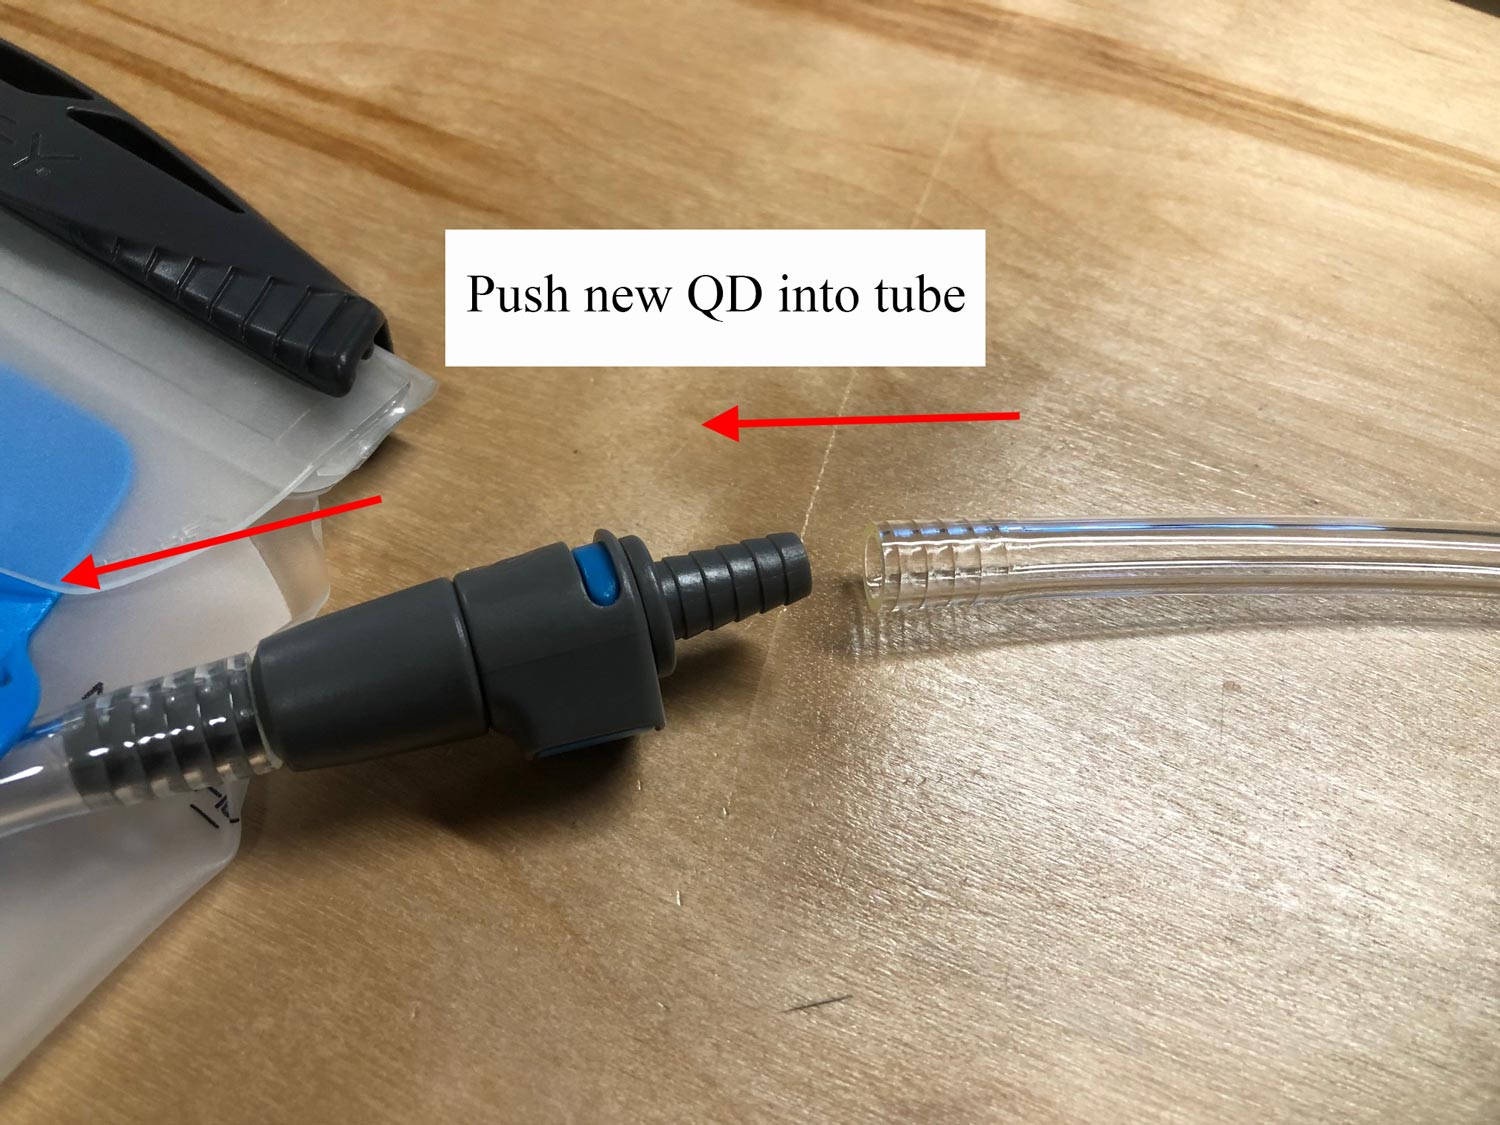 push-QD-quick-disconnect-into-tube.jpg